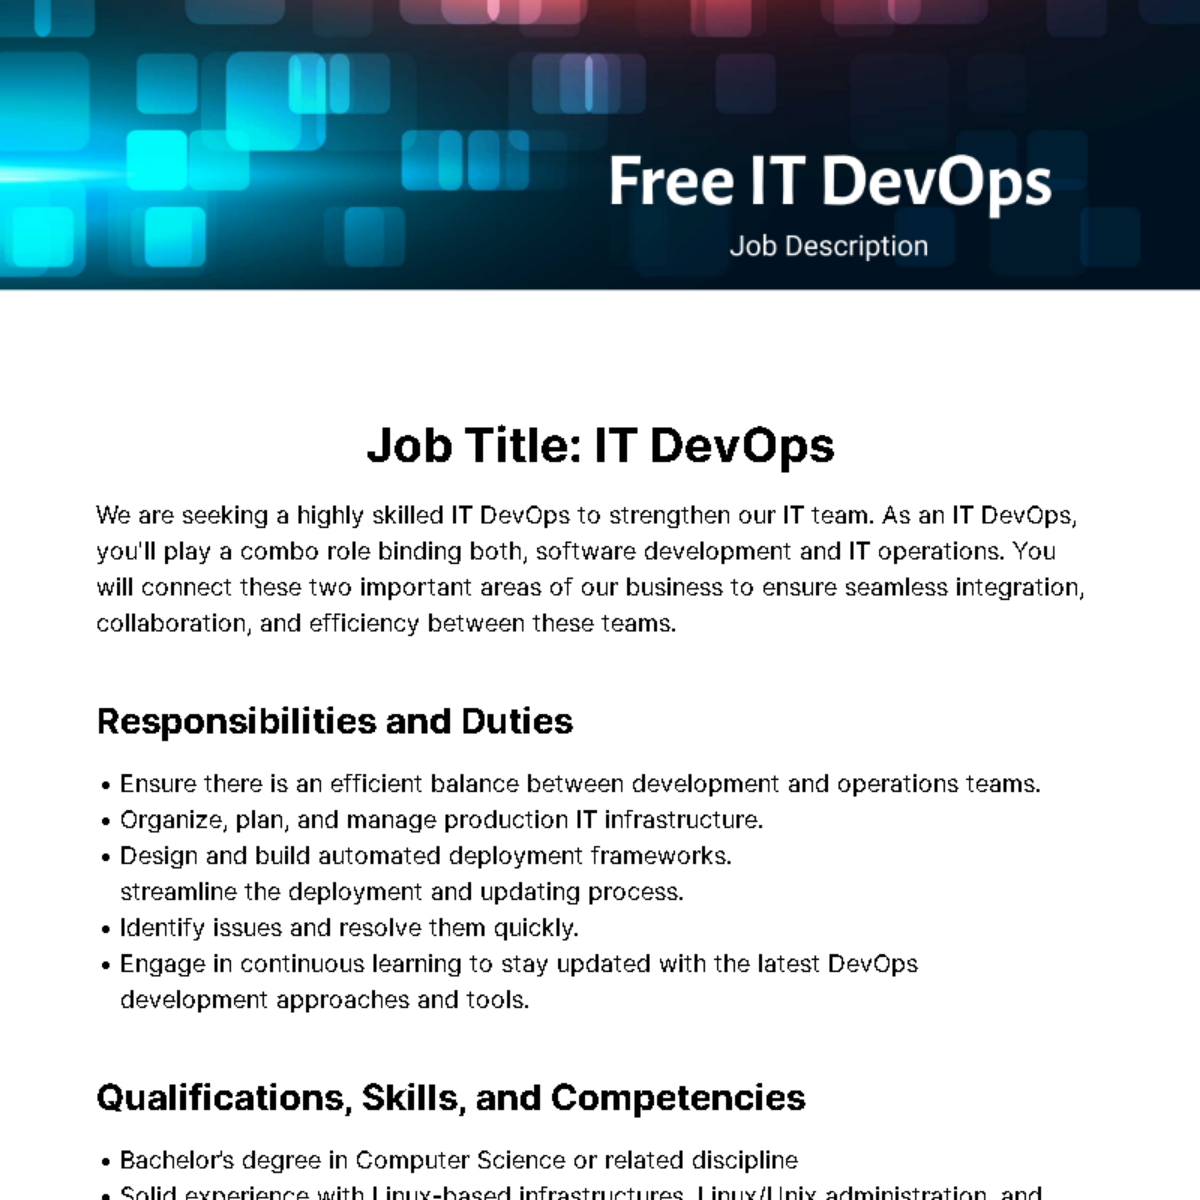 Free IT Devops Job Description Template